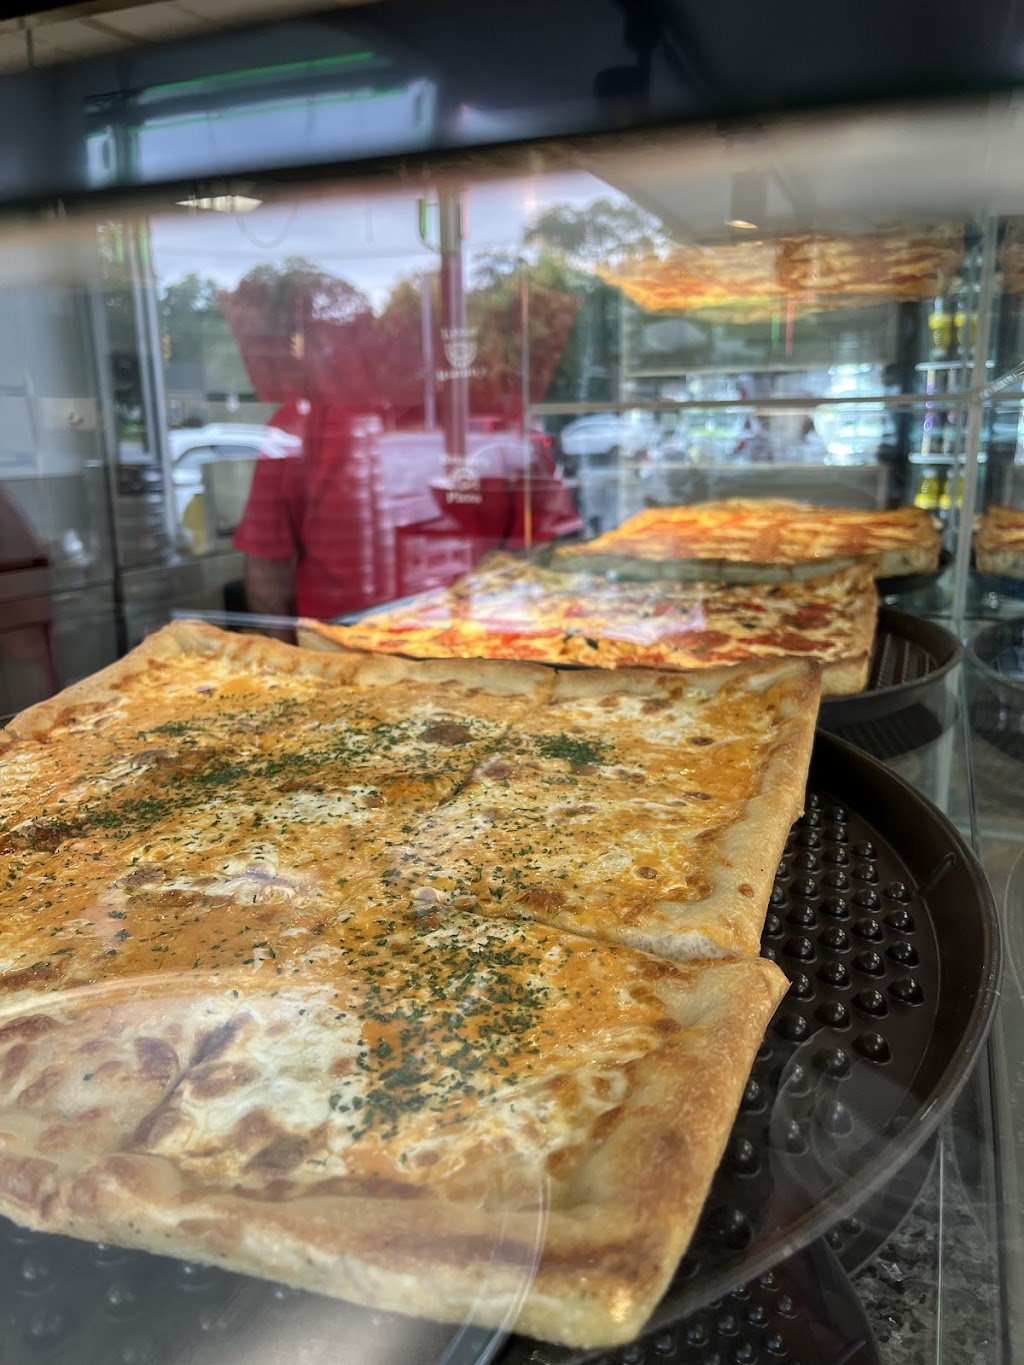 Brunos Pizza | Pizzeria | 1100 Portion Rd, Farmingville, NY 11738 | Phone: (631) 846-6605